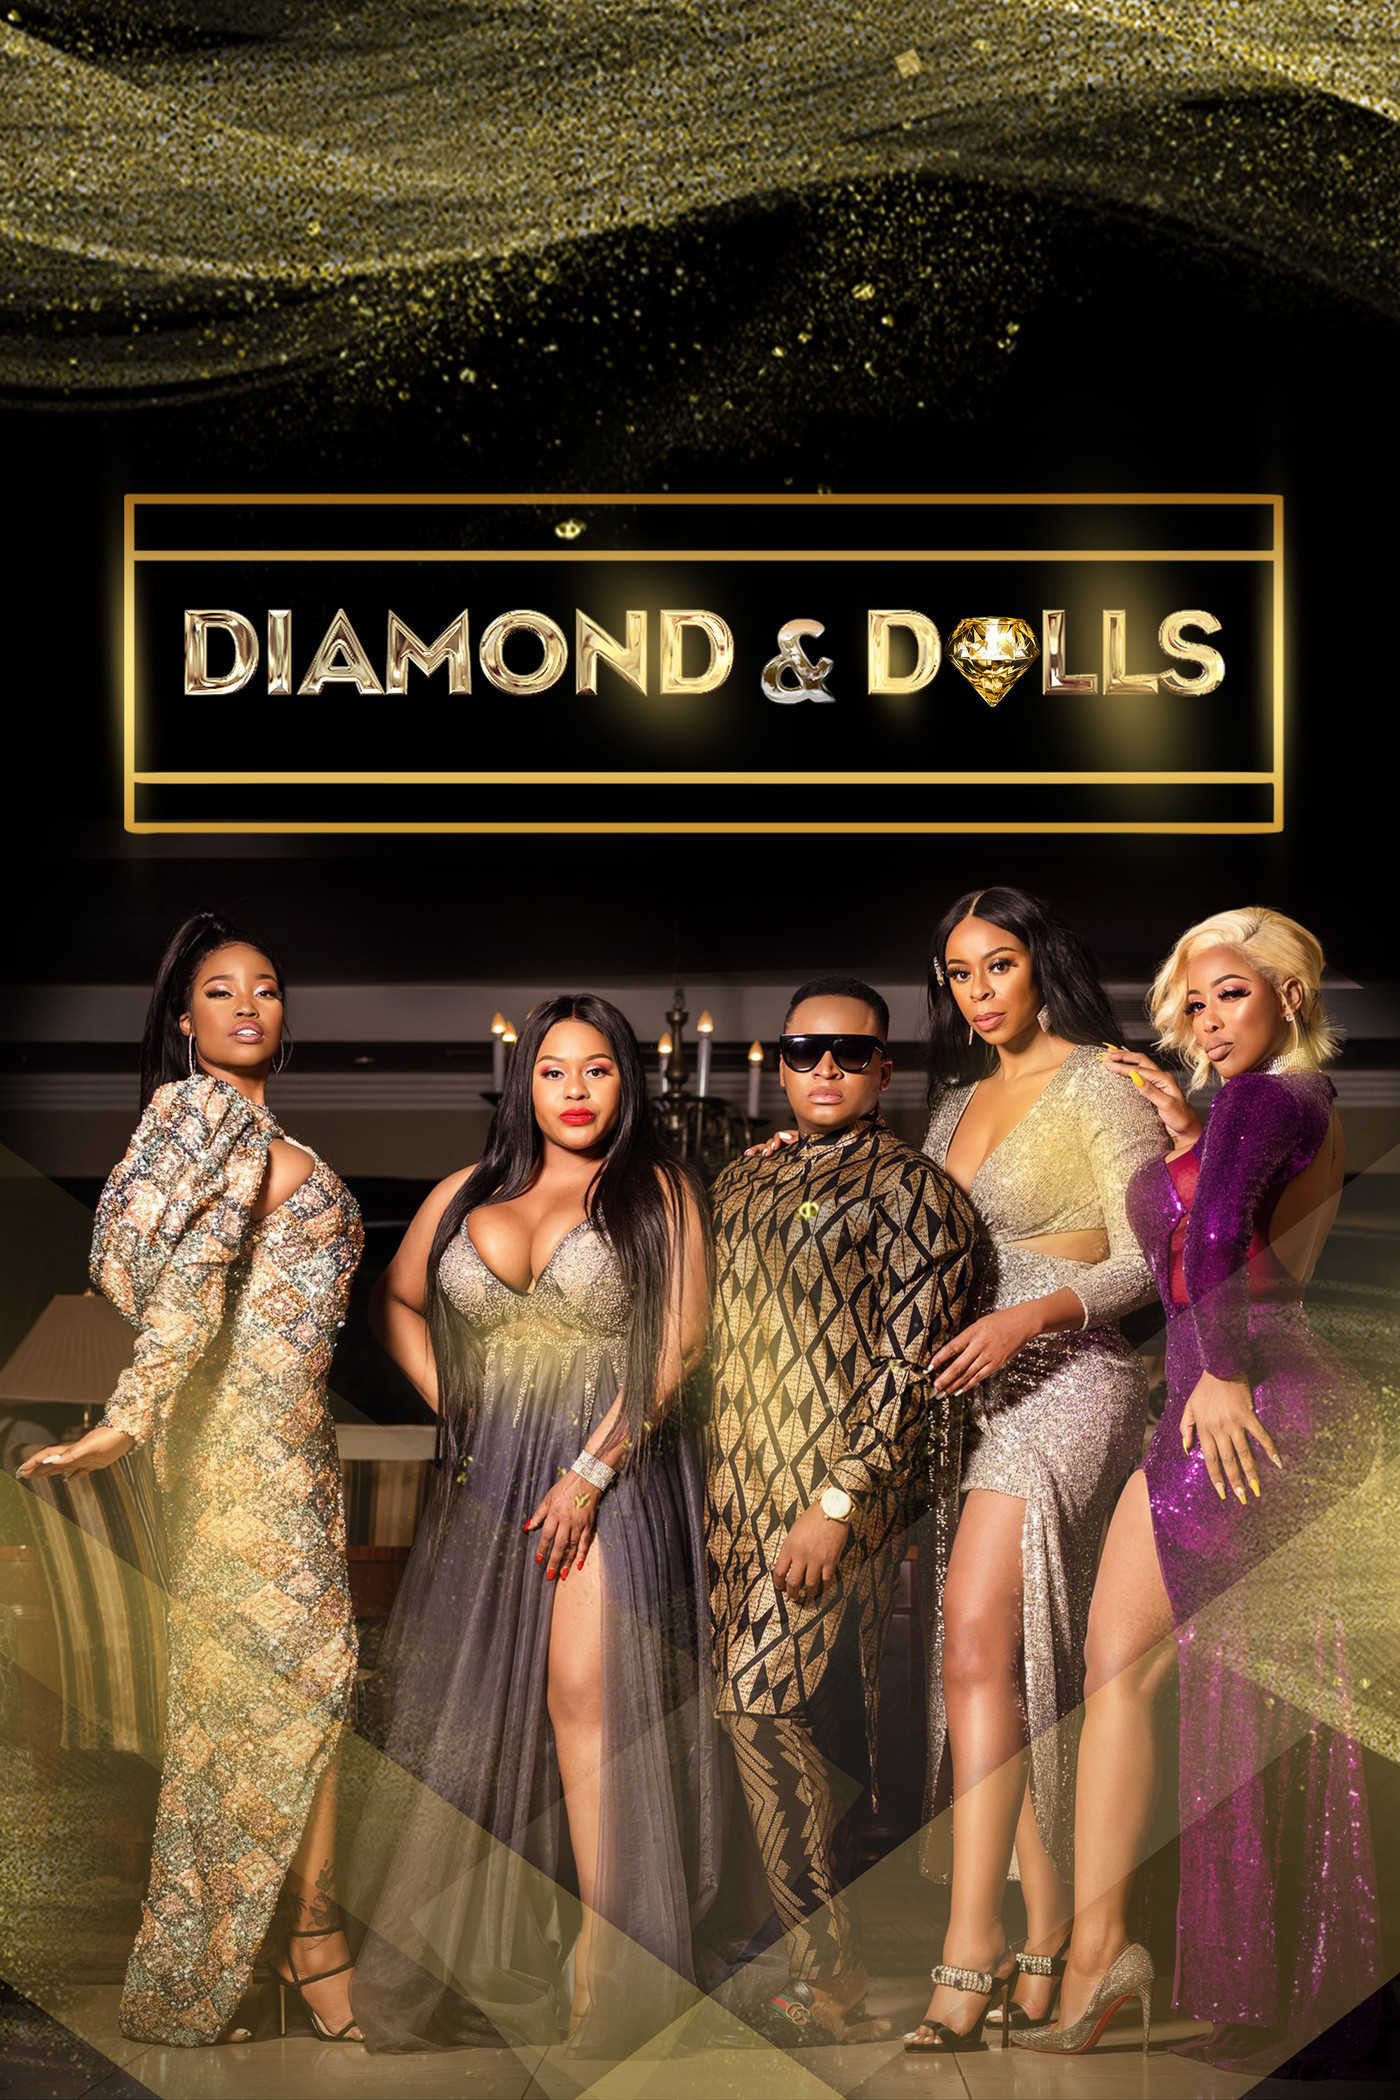 Diamond & Dolls